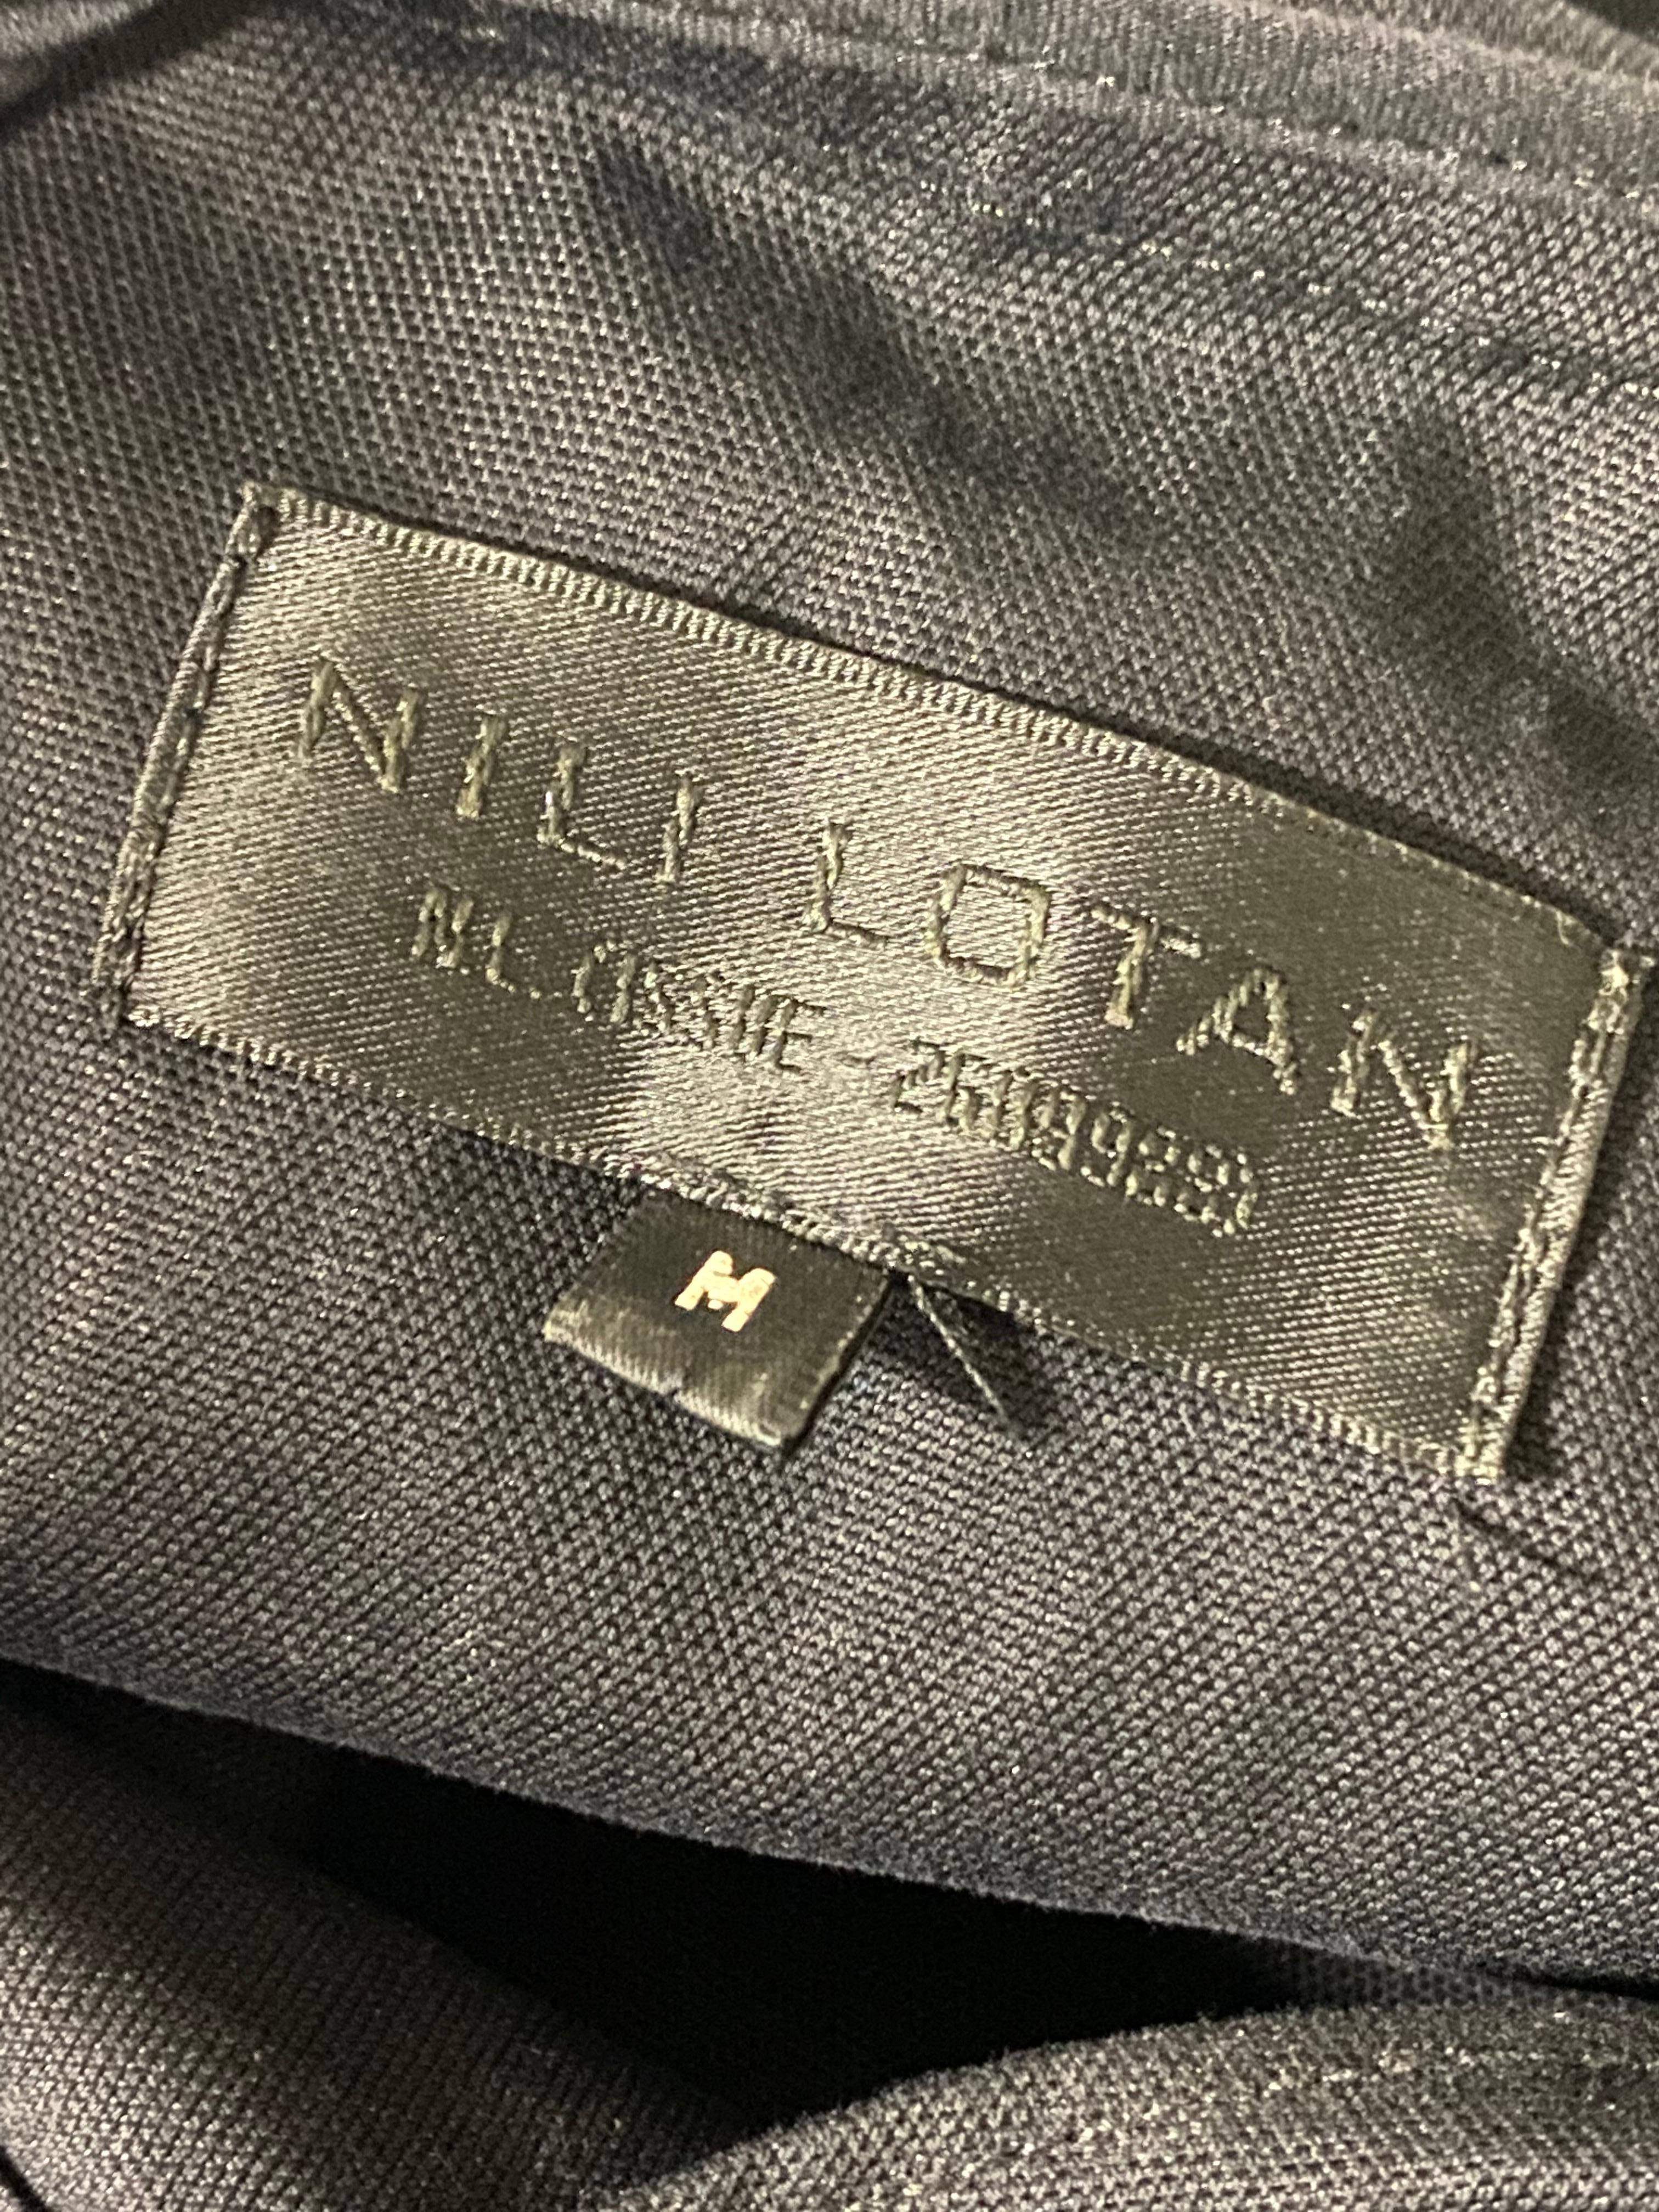 Nili Lotan Black Cotton Top, Size Medium For Sale 3